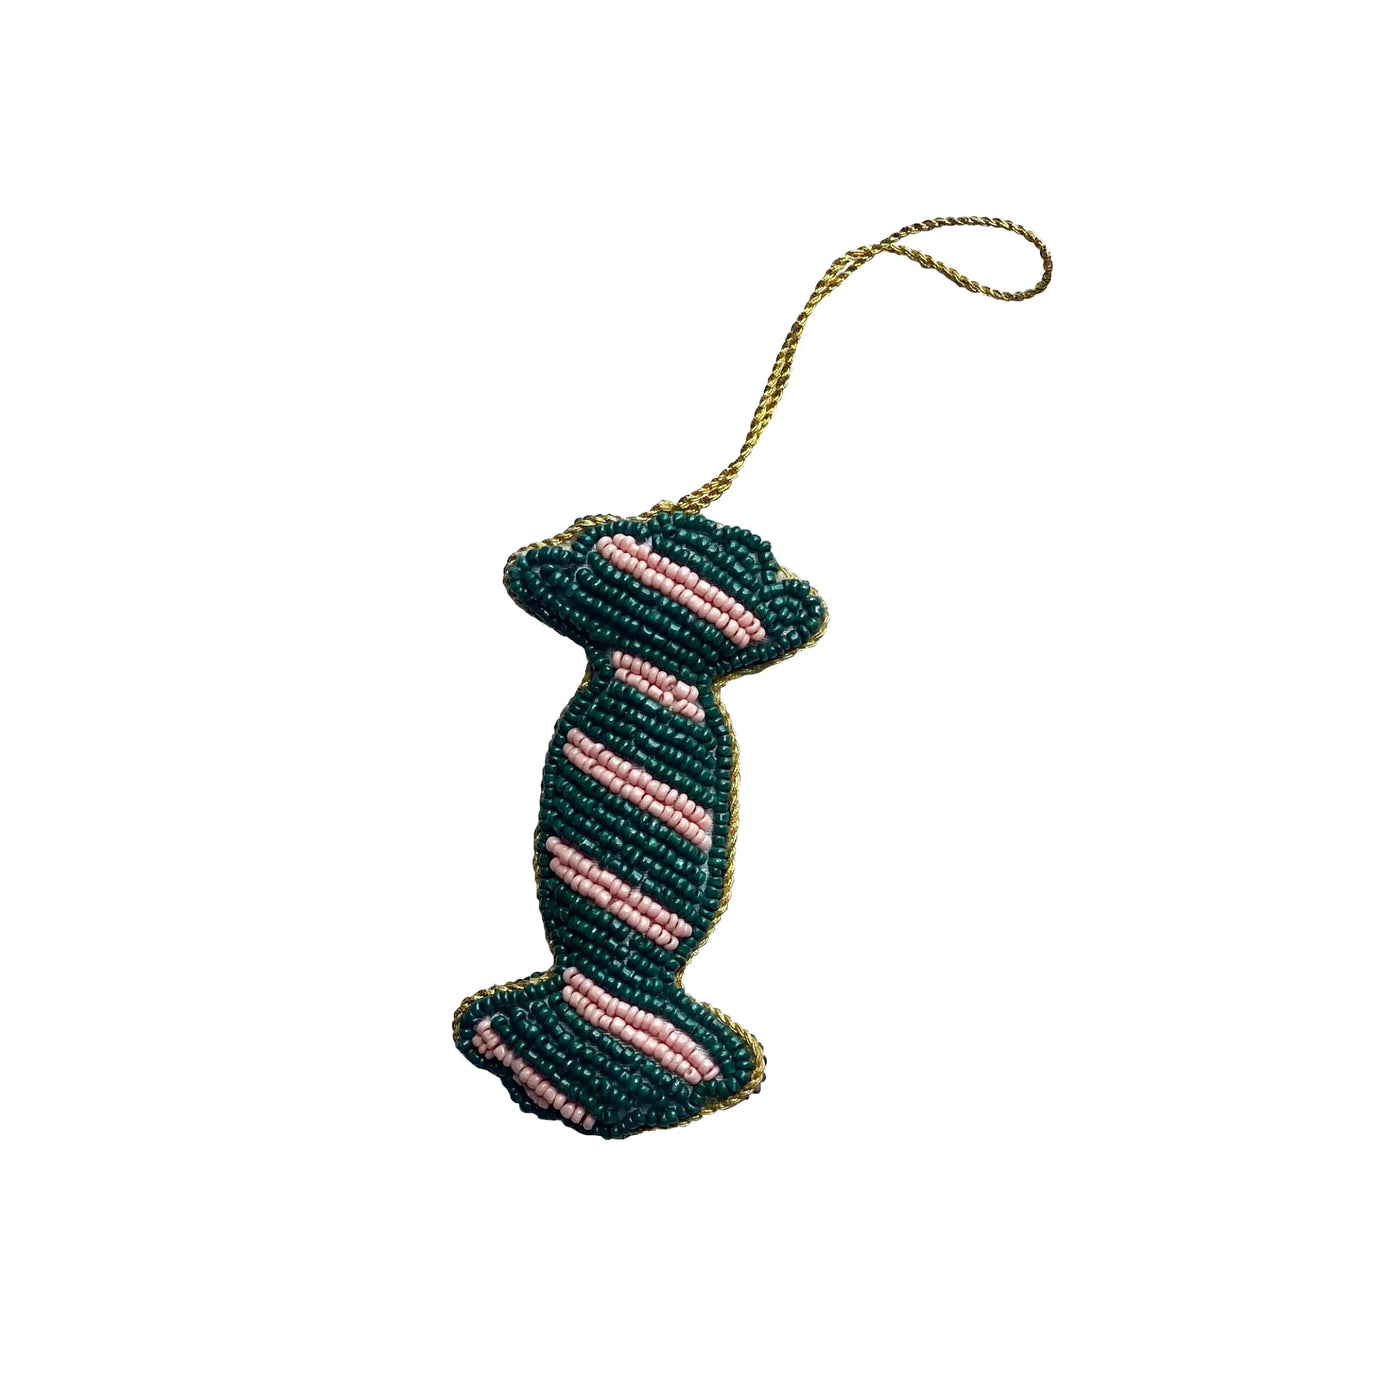 Nynne Rosenvinge | Håndlavede perle-bolsjer til juletræet - 5 forskellige farver Nynne Rosenvinge